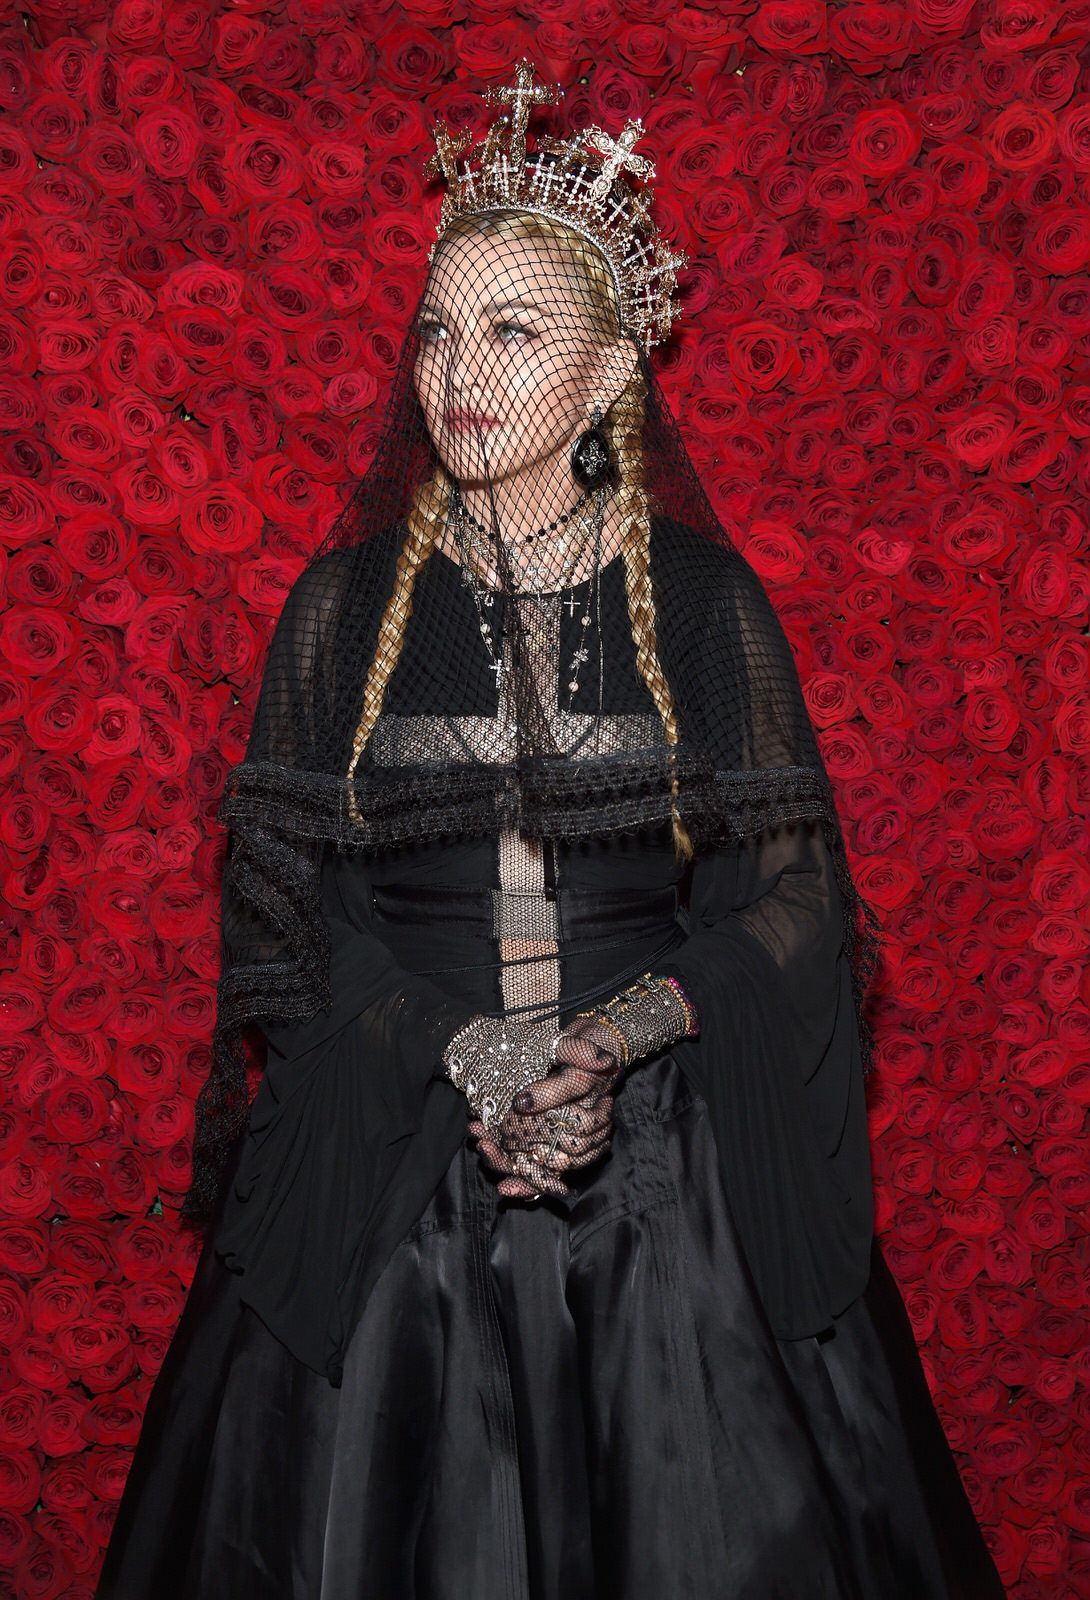 Madonna attends the Met Gala at the Metropolitan Museum of Art in